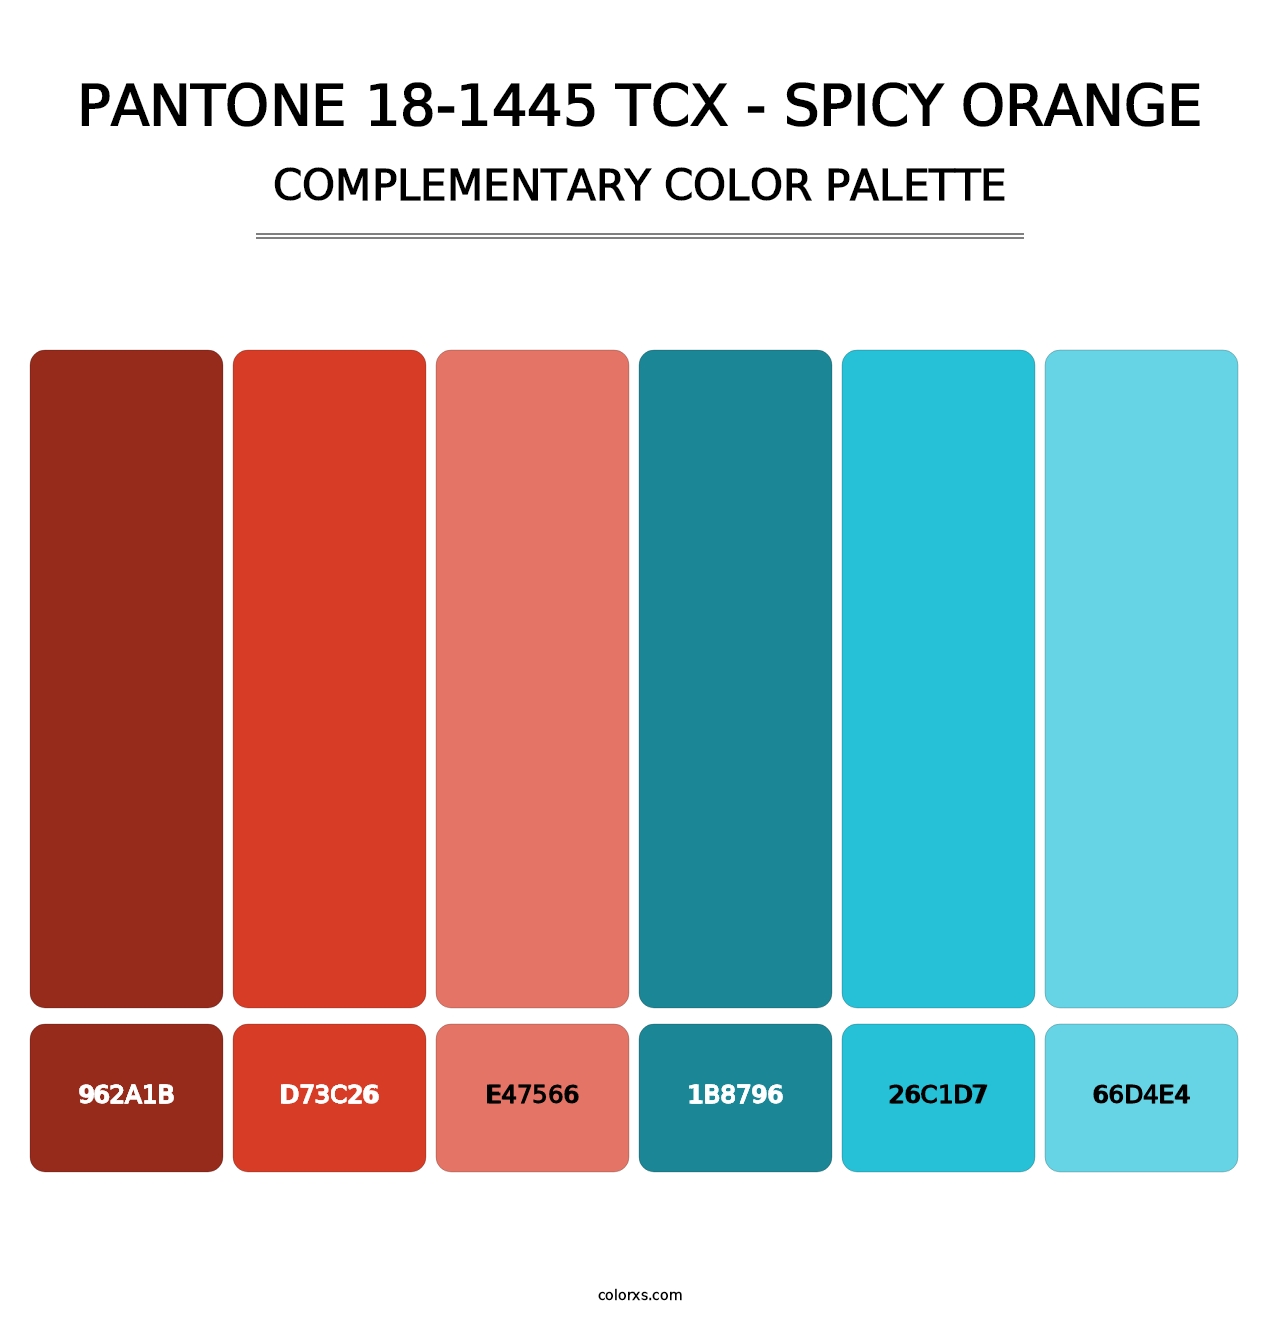 PANTONE 18-1445 TCX - Spicy Orange - Complementary Color Palette